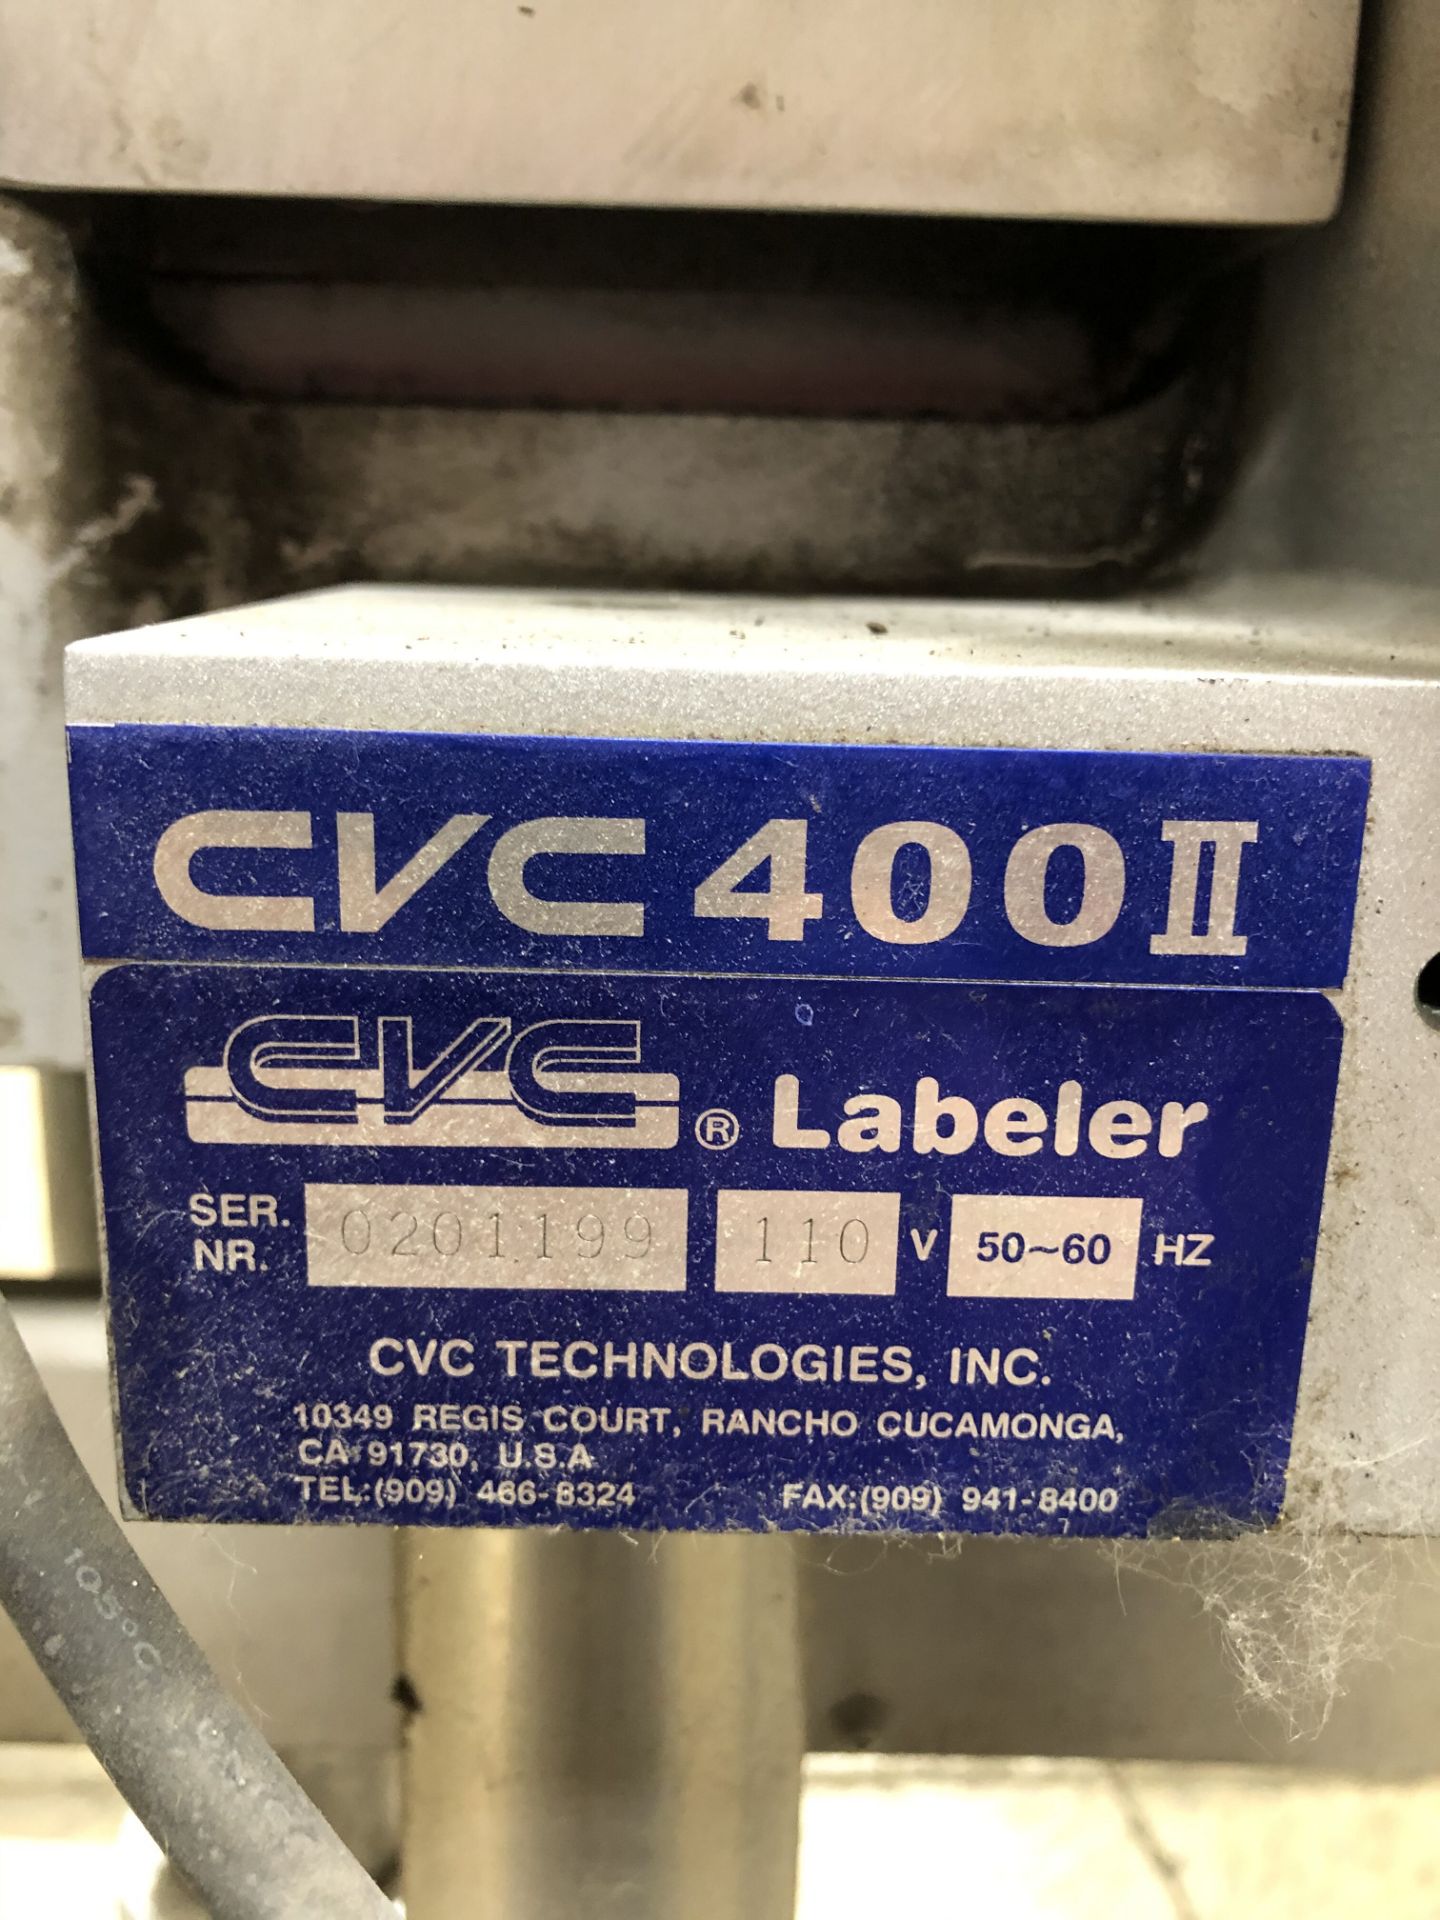 CVC 400 II Labeler, S/N #0201199, 110 Volts - Image 5 of 8